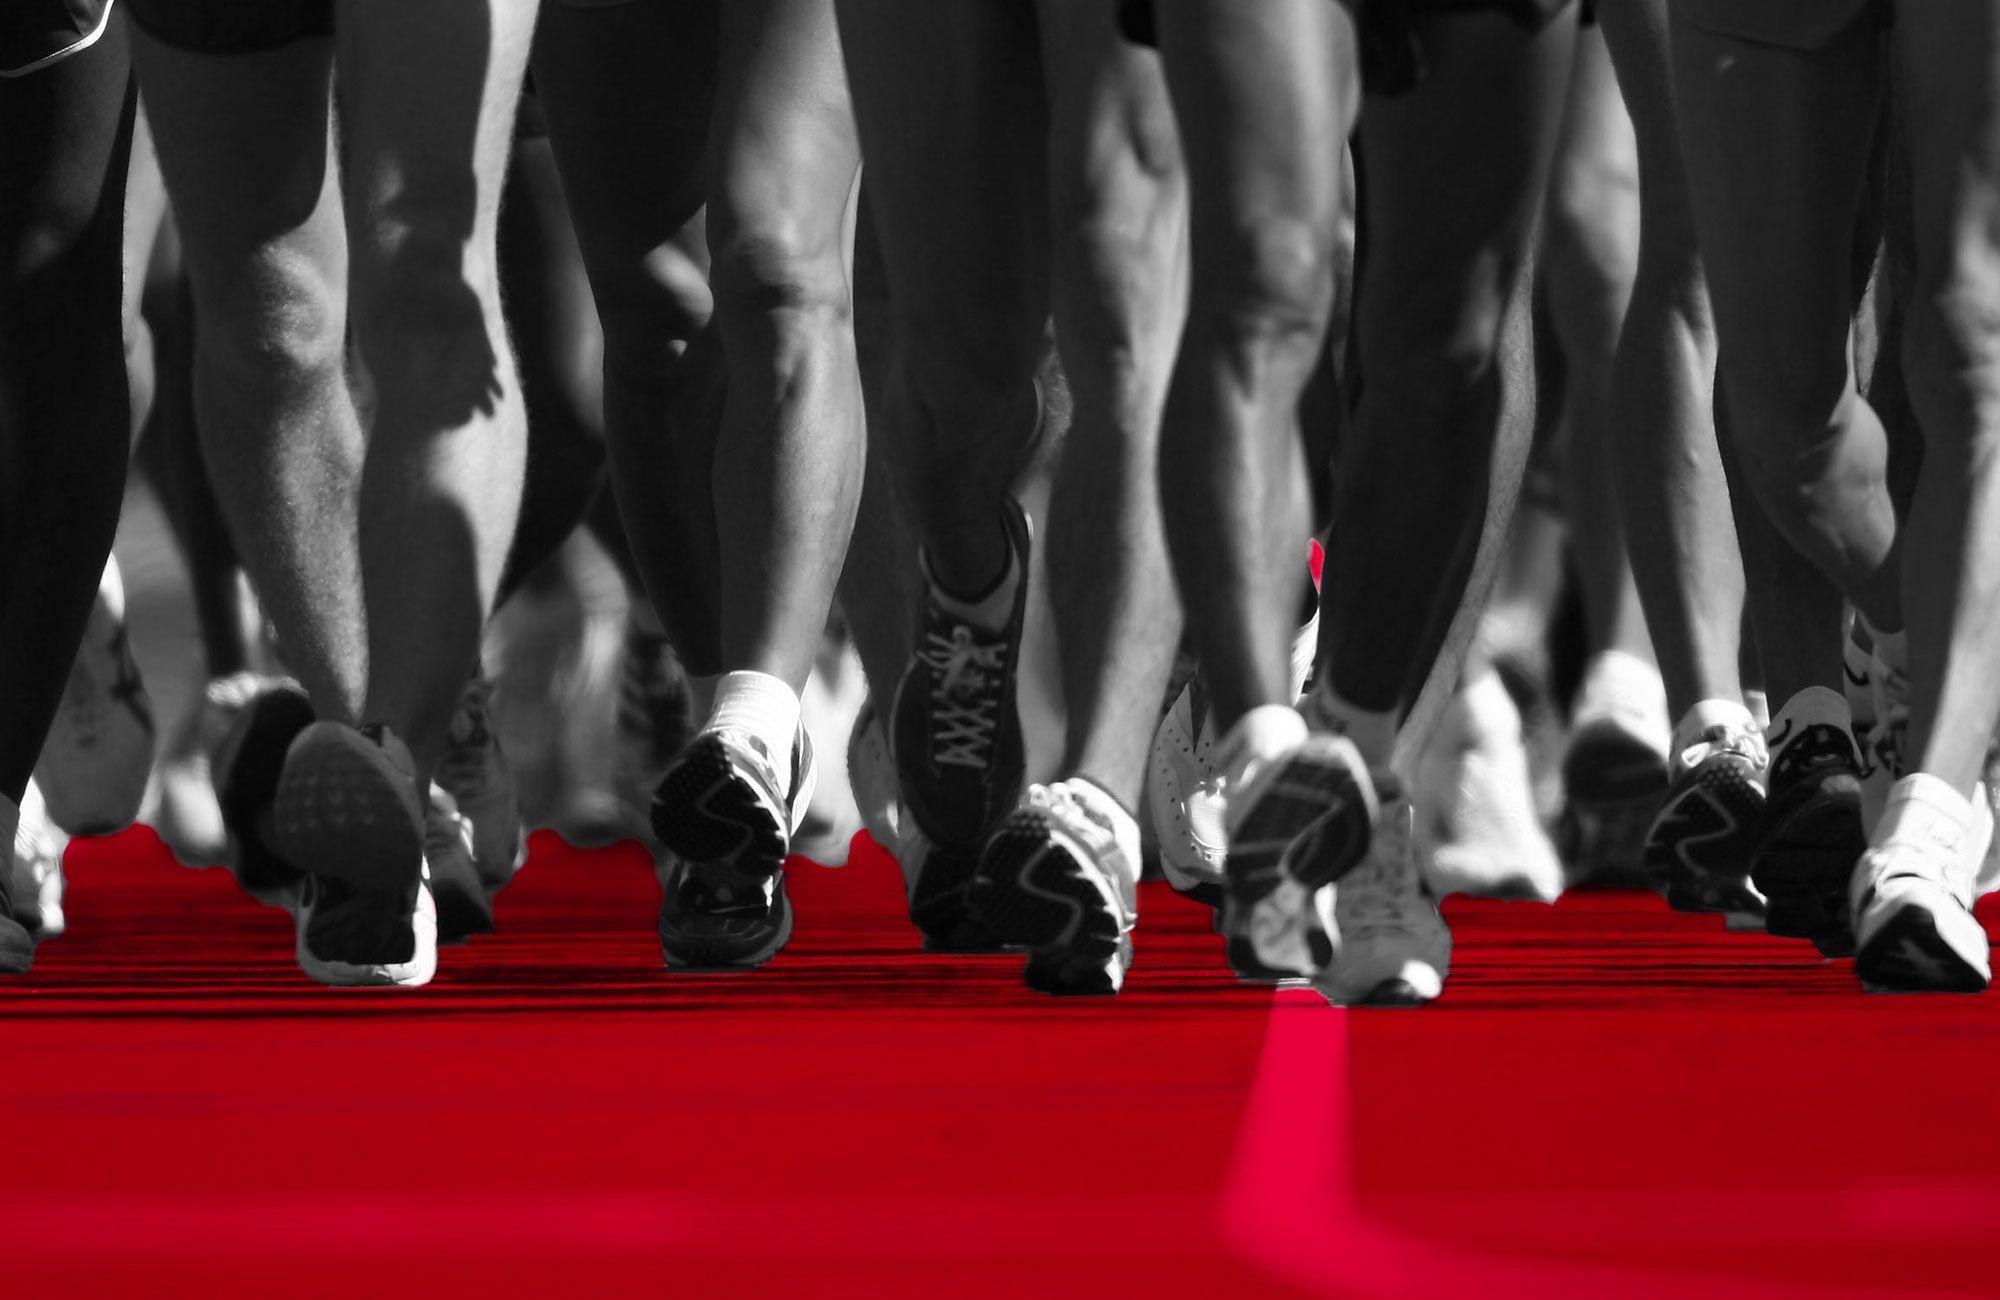 Racewalking: Monochrome professionals compete, Competitive outdoor sports discipline. 2000x1300 HD Wallpaper.